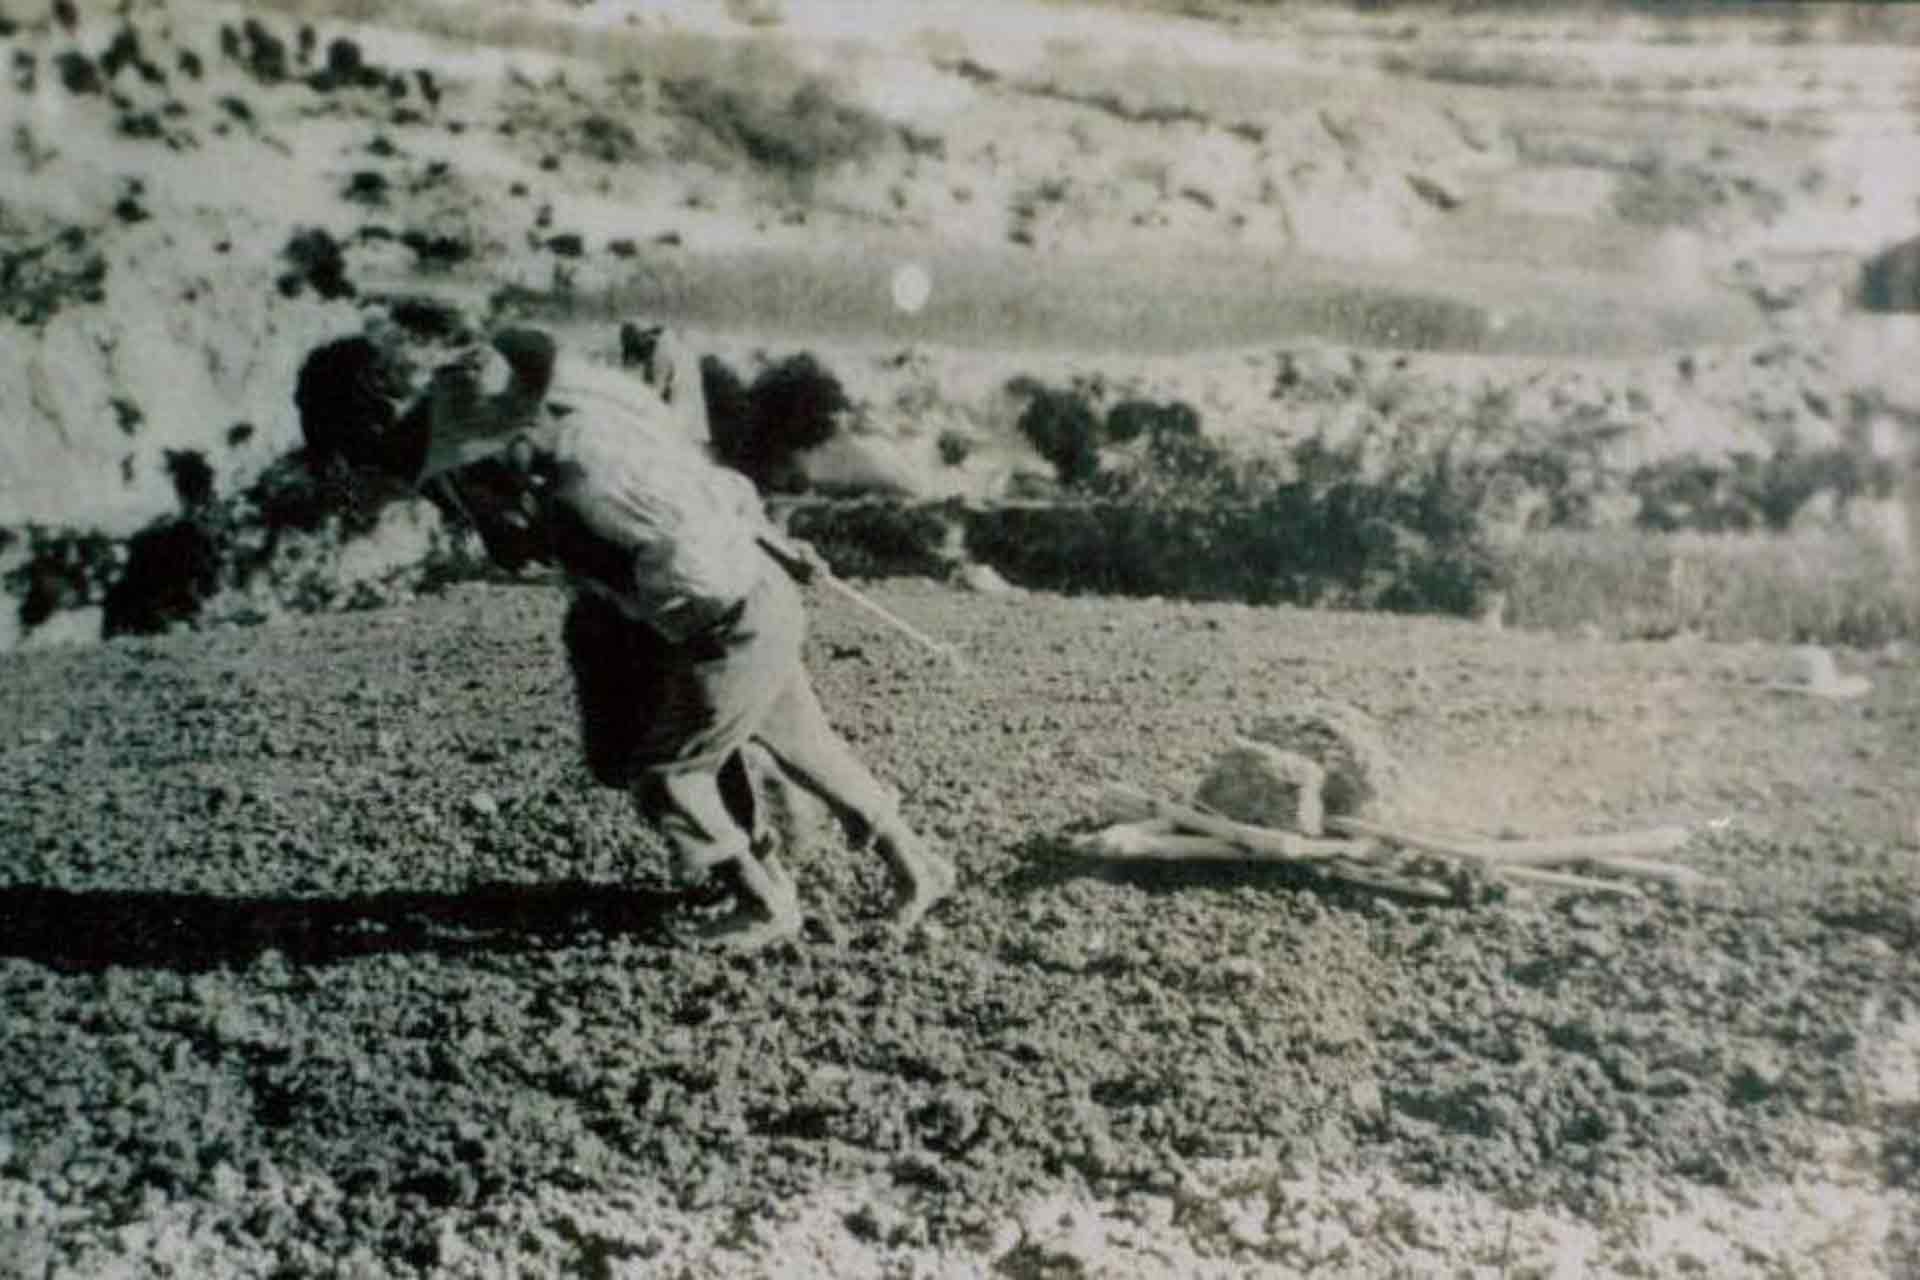 maltese farmers ploughing land harrow